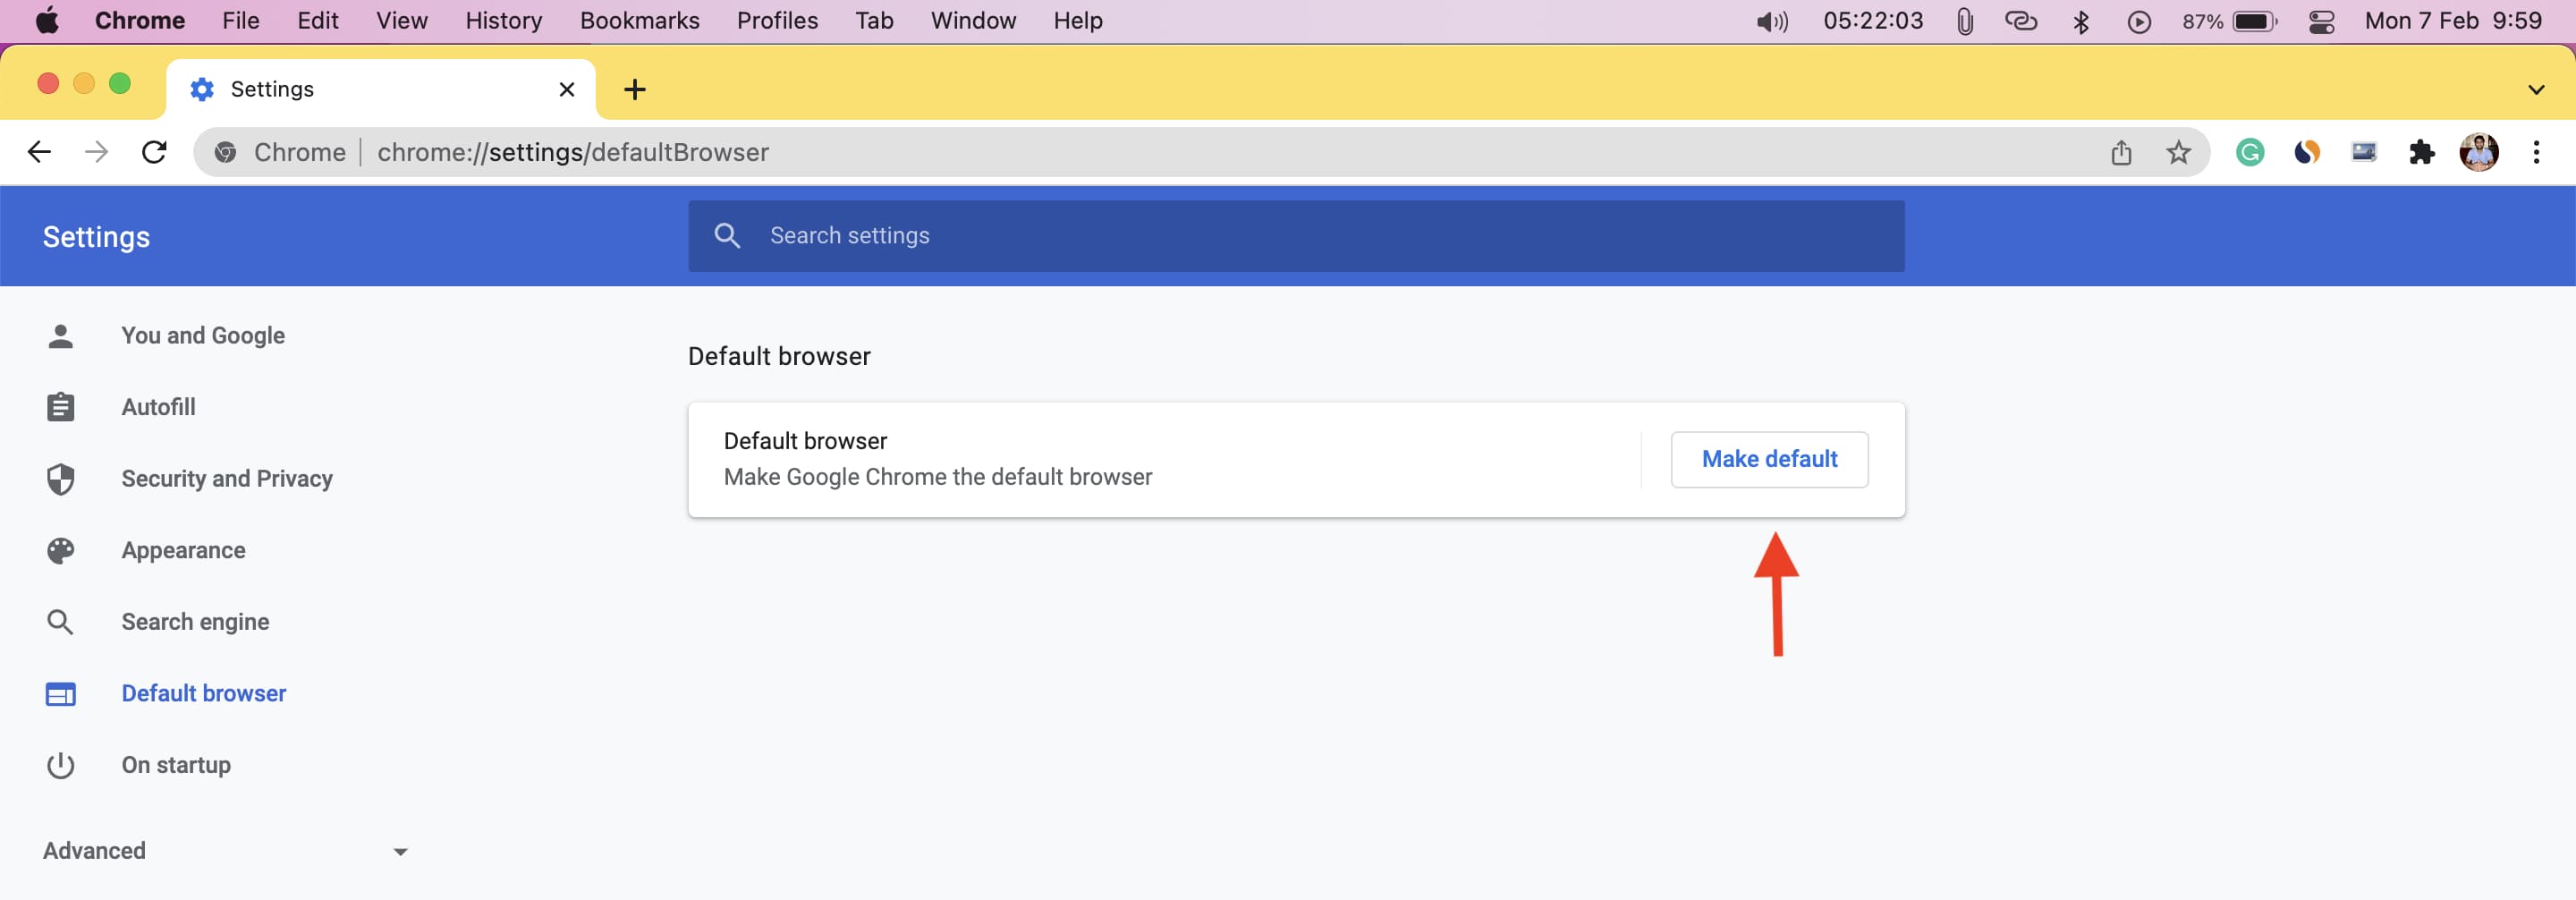 Make Google Chrome the default browser on Mac